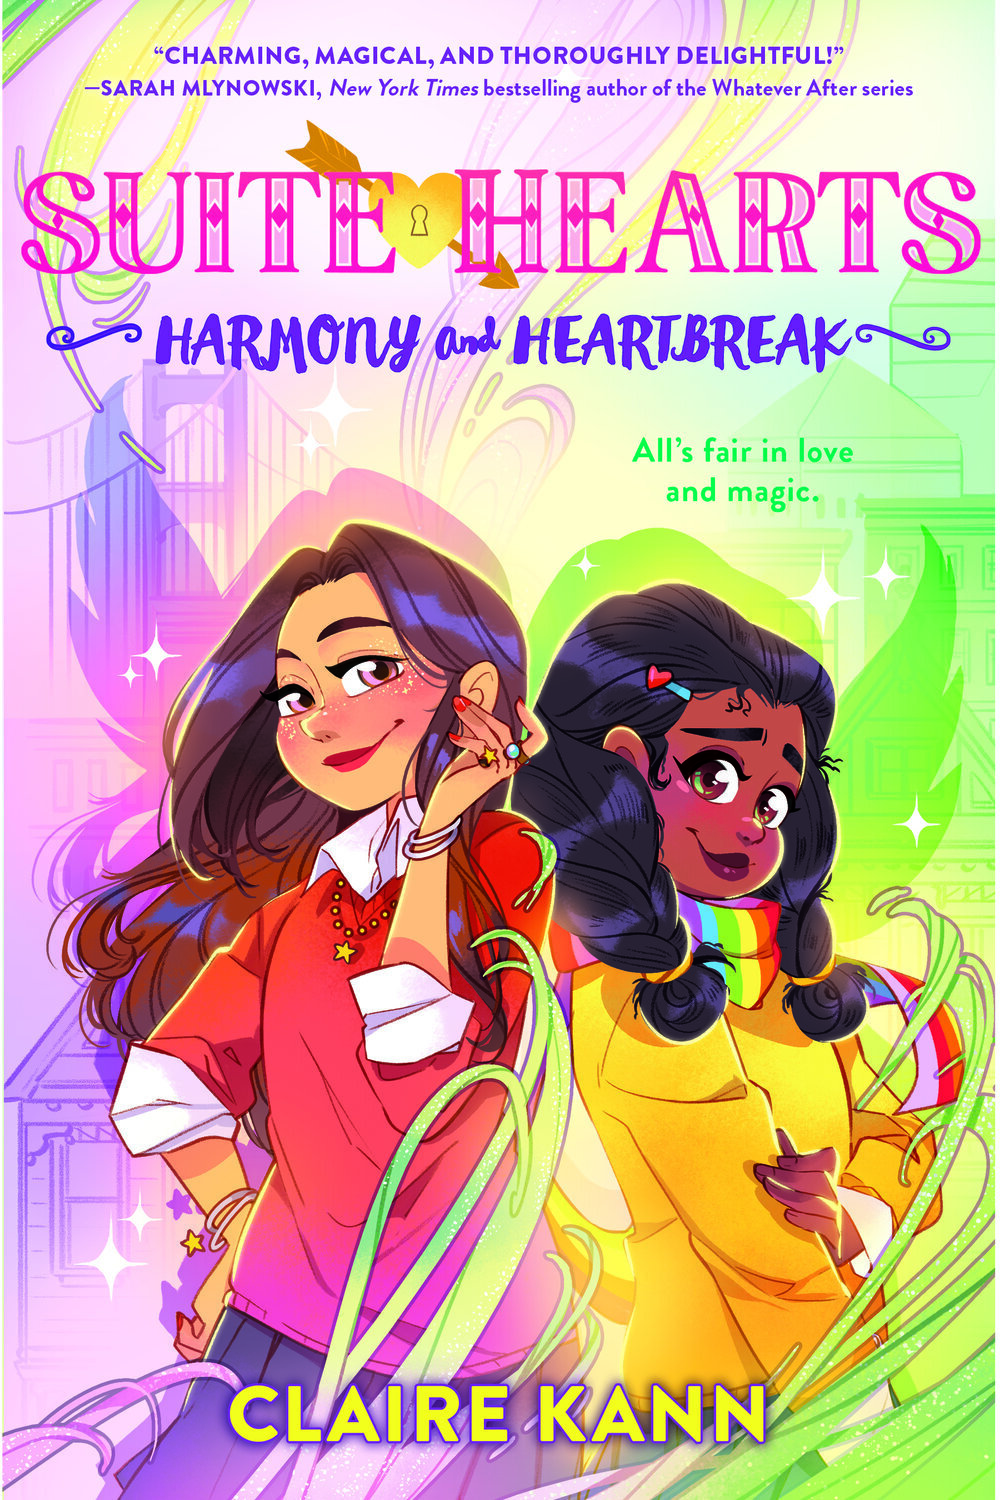 Harmony+and+Heartbreak_SuiteHearts+cover-1.jpg